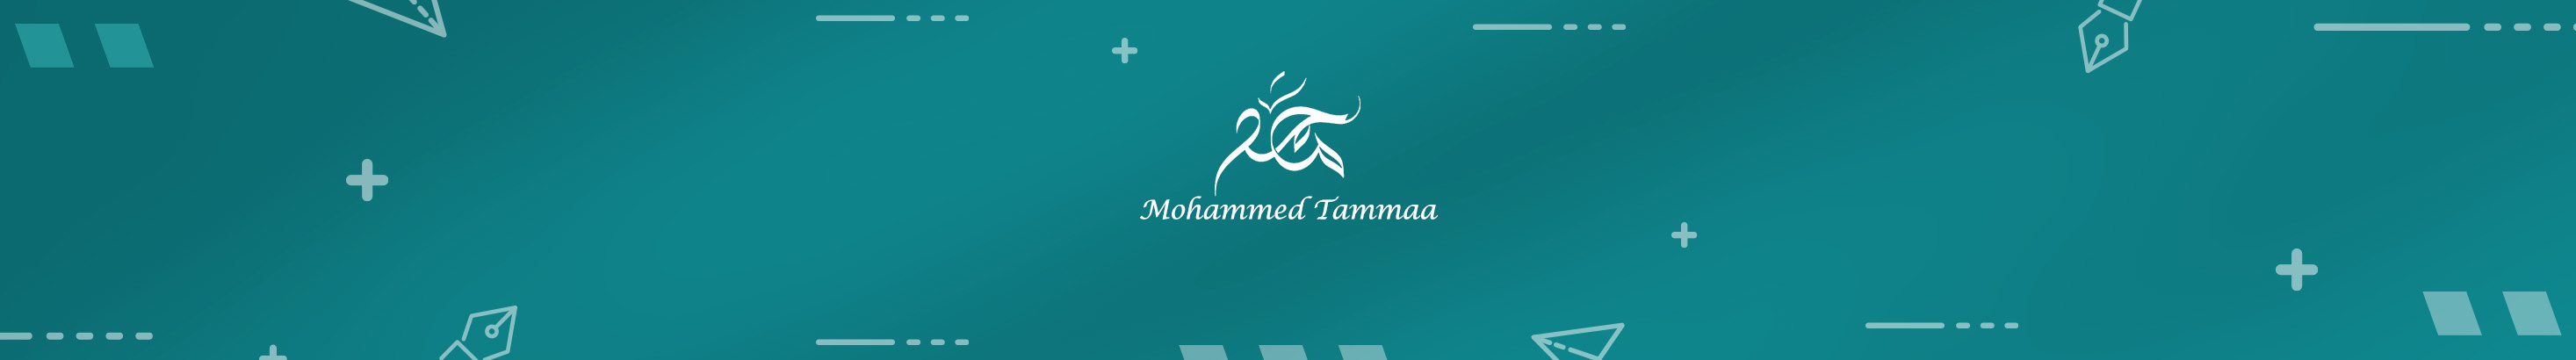 Profielbanner van Mohammed Tammaa